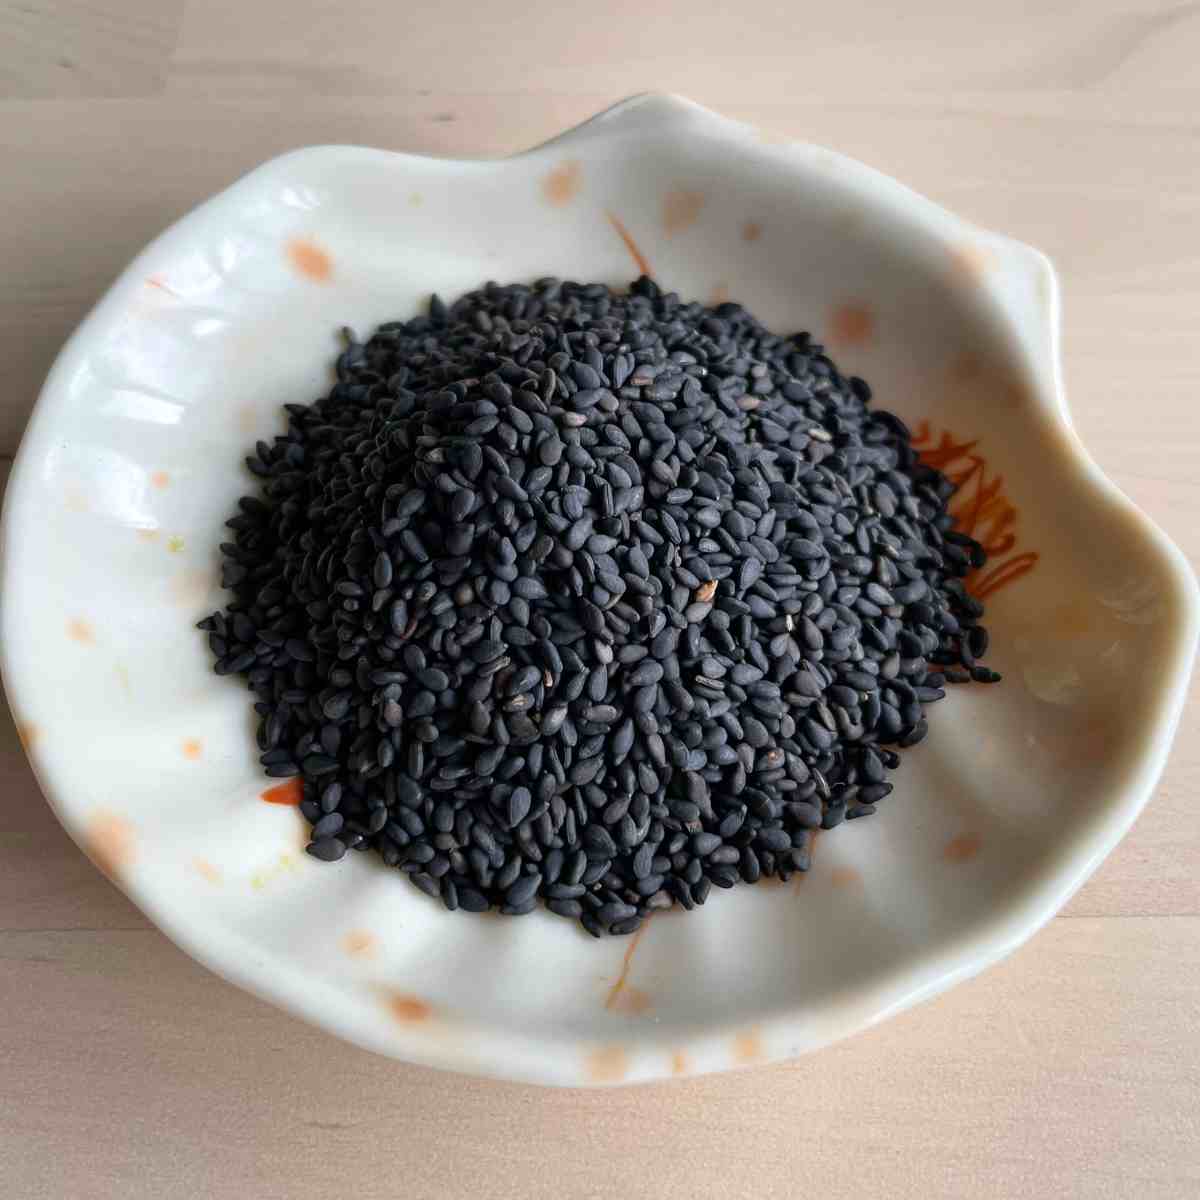 Black sesame seeds on a plate